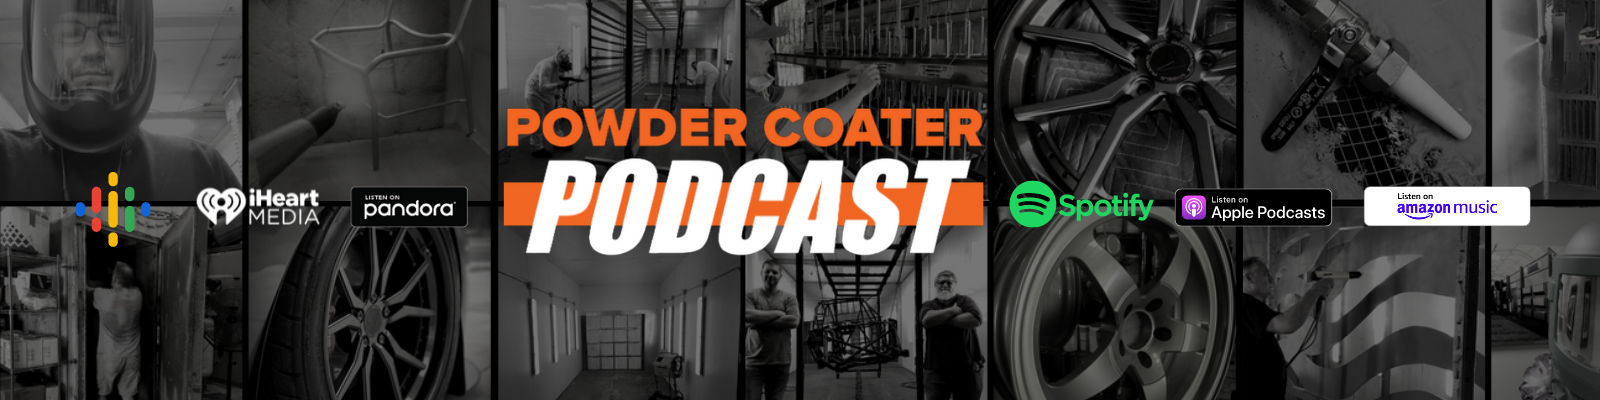 Powder Coater Podcast